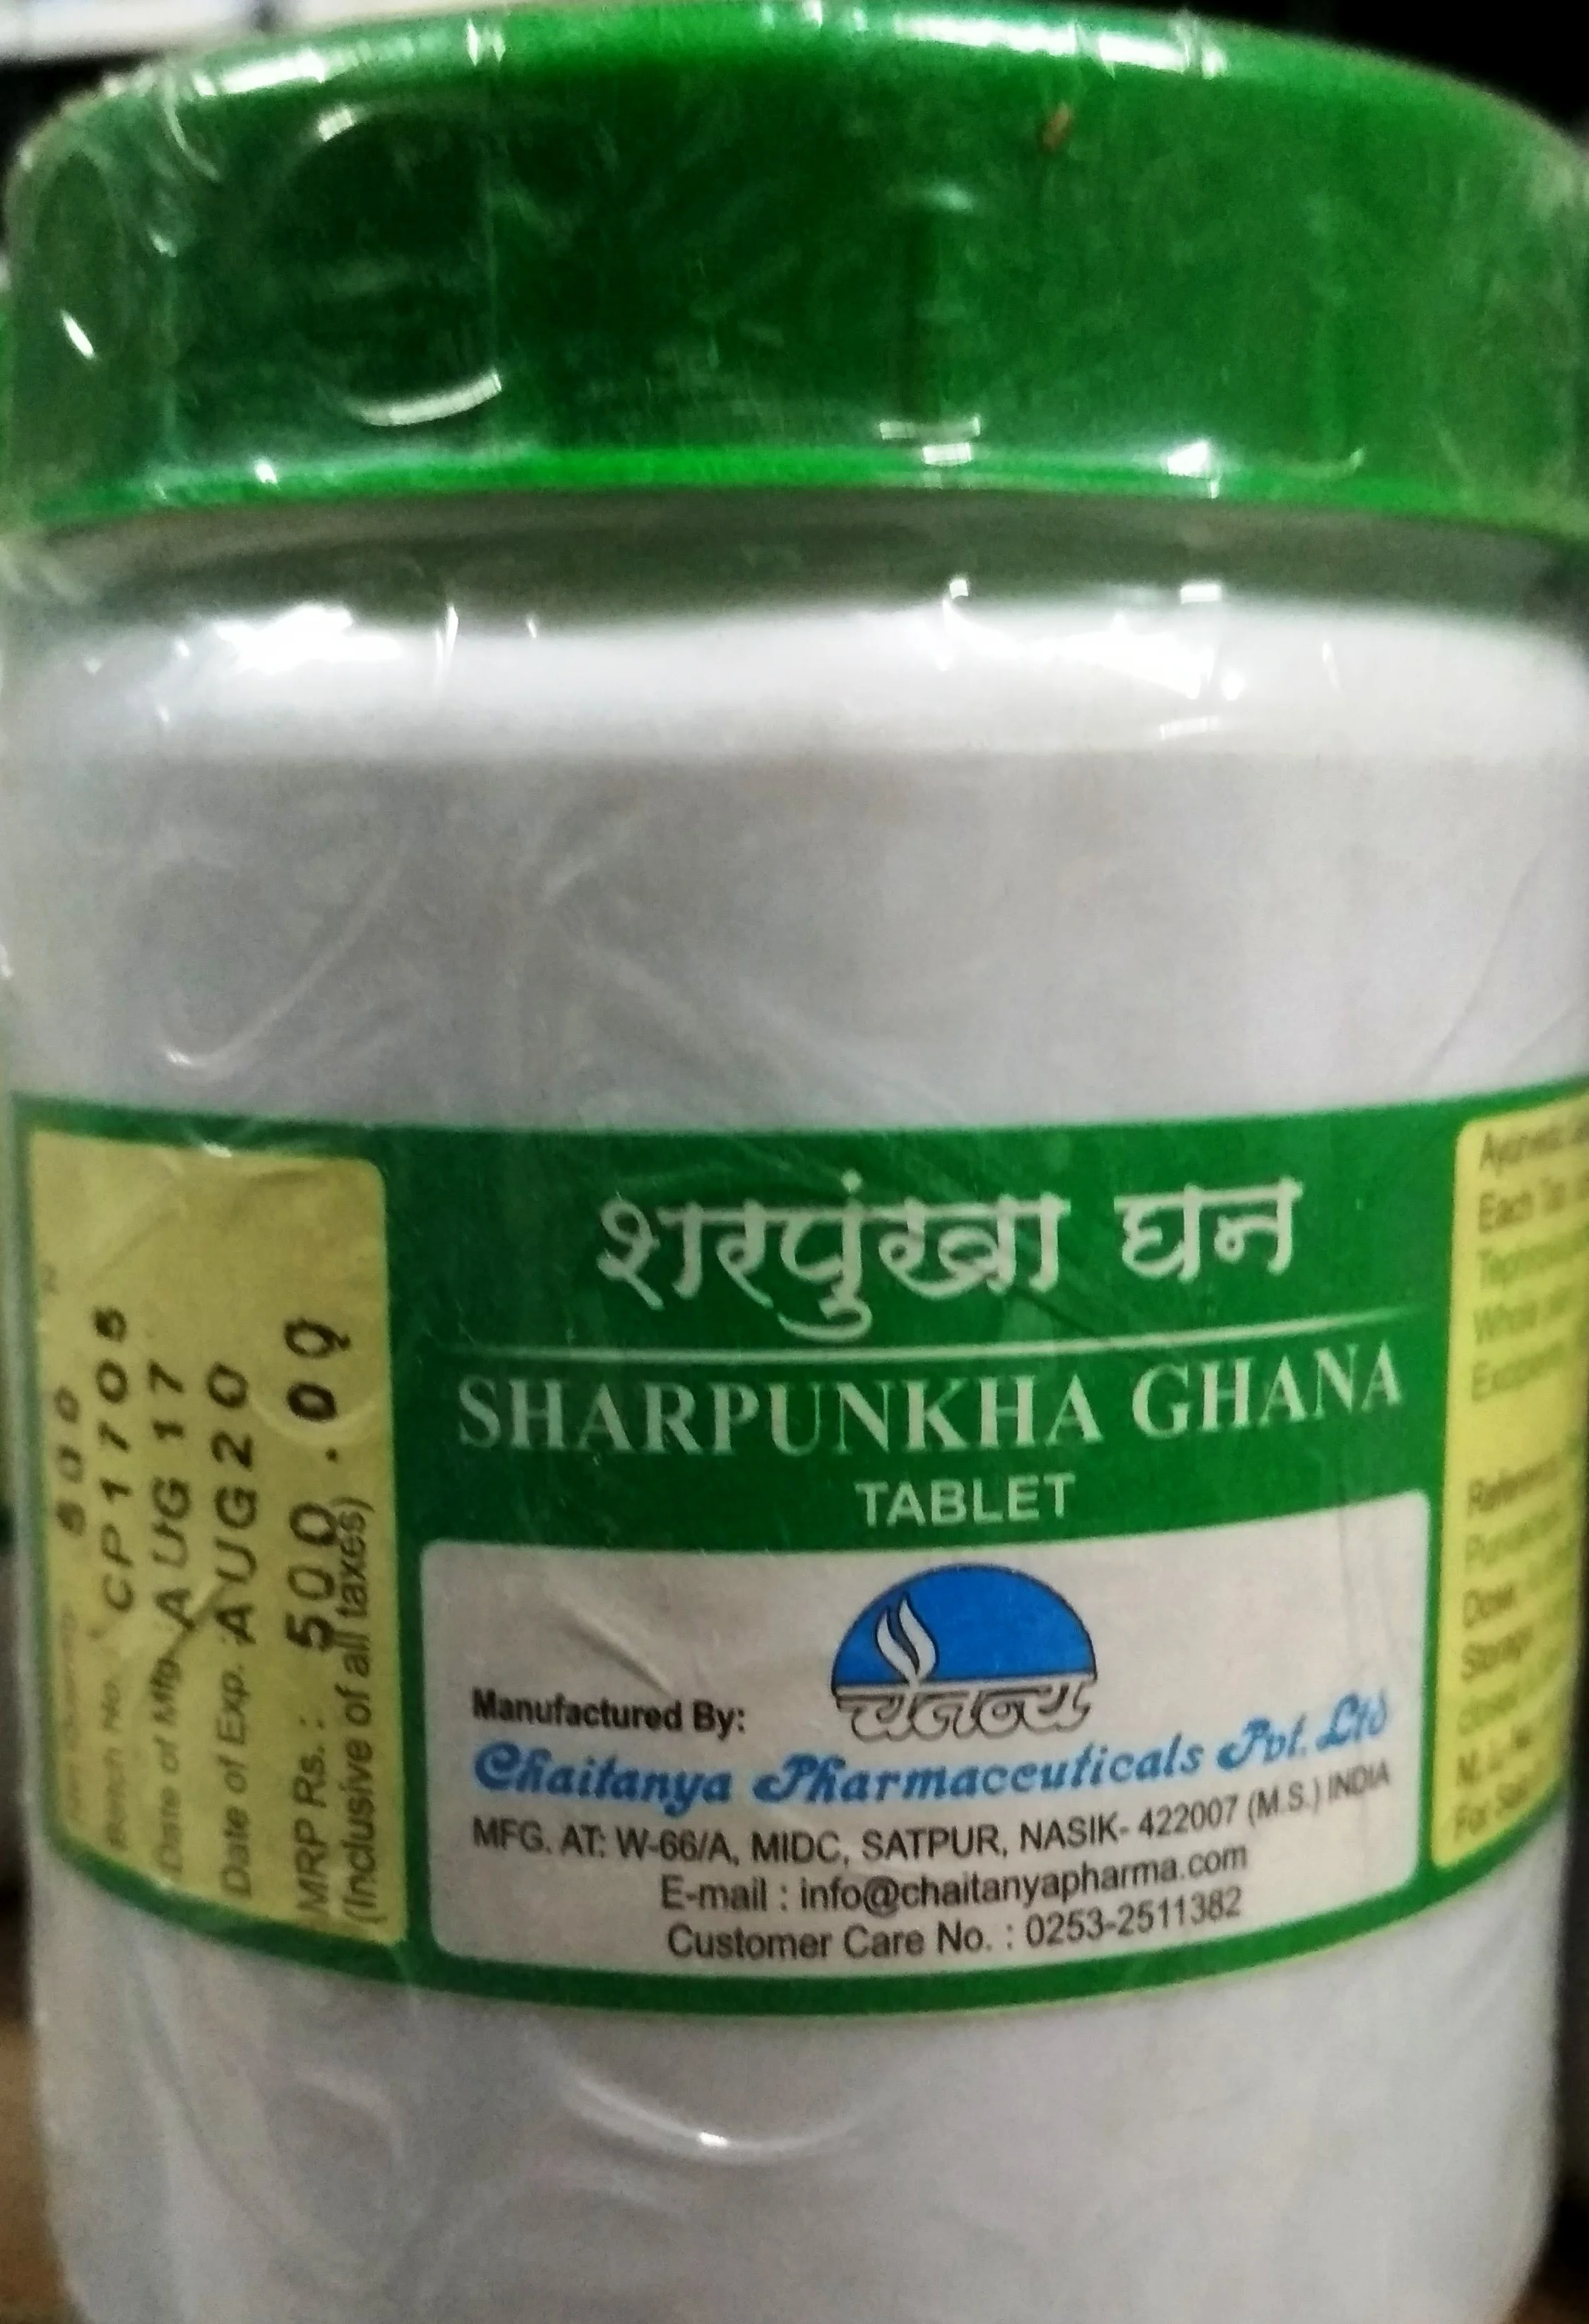 sharpunkha ghana 500tab upto 20% off free shipping chaitanya pharmaceuticals